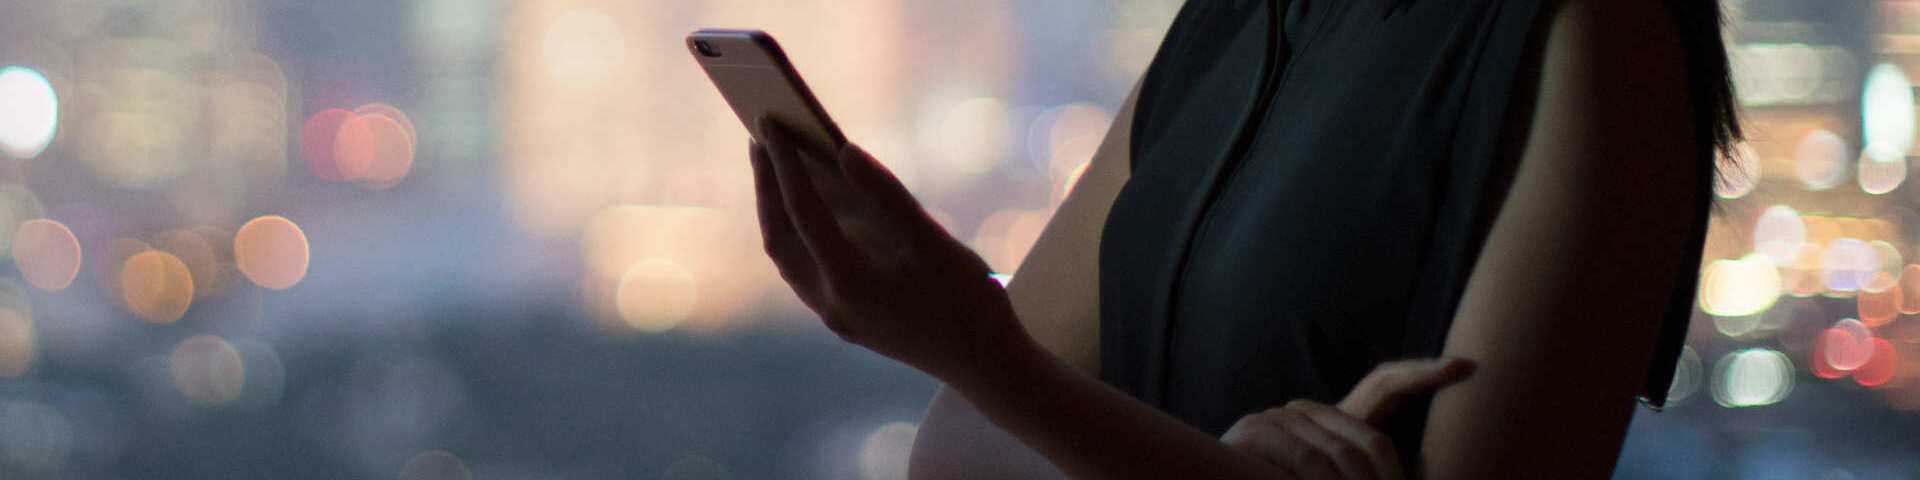 woman reviews smartphone over skyline